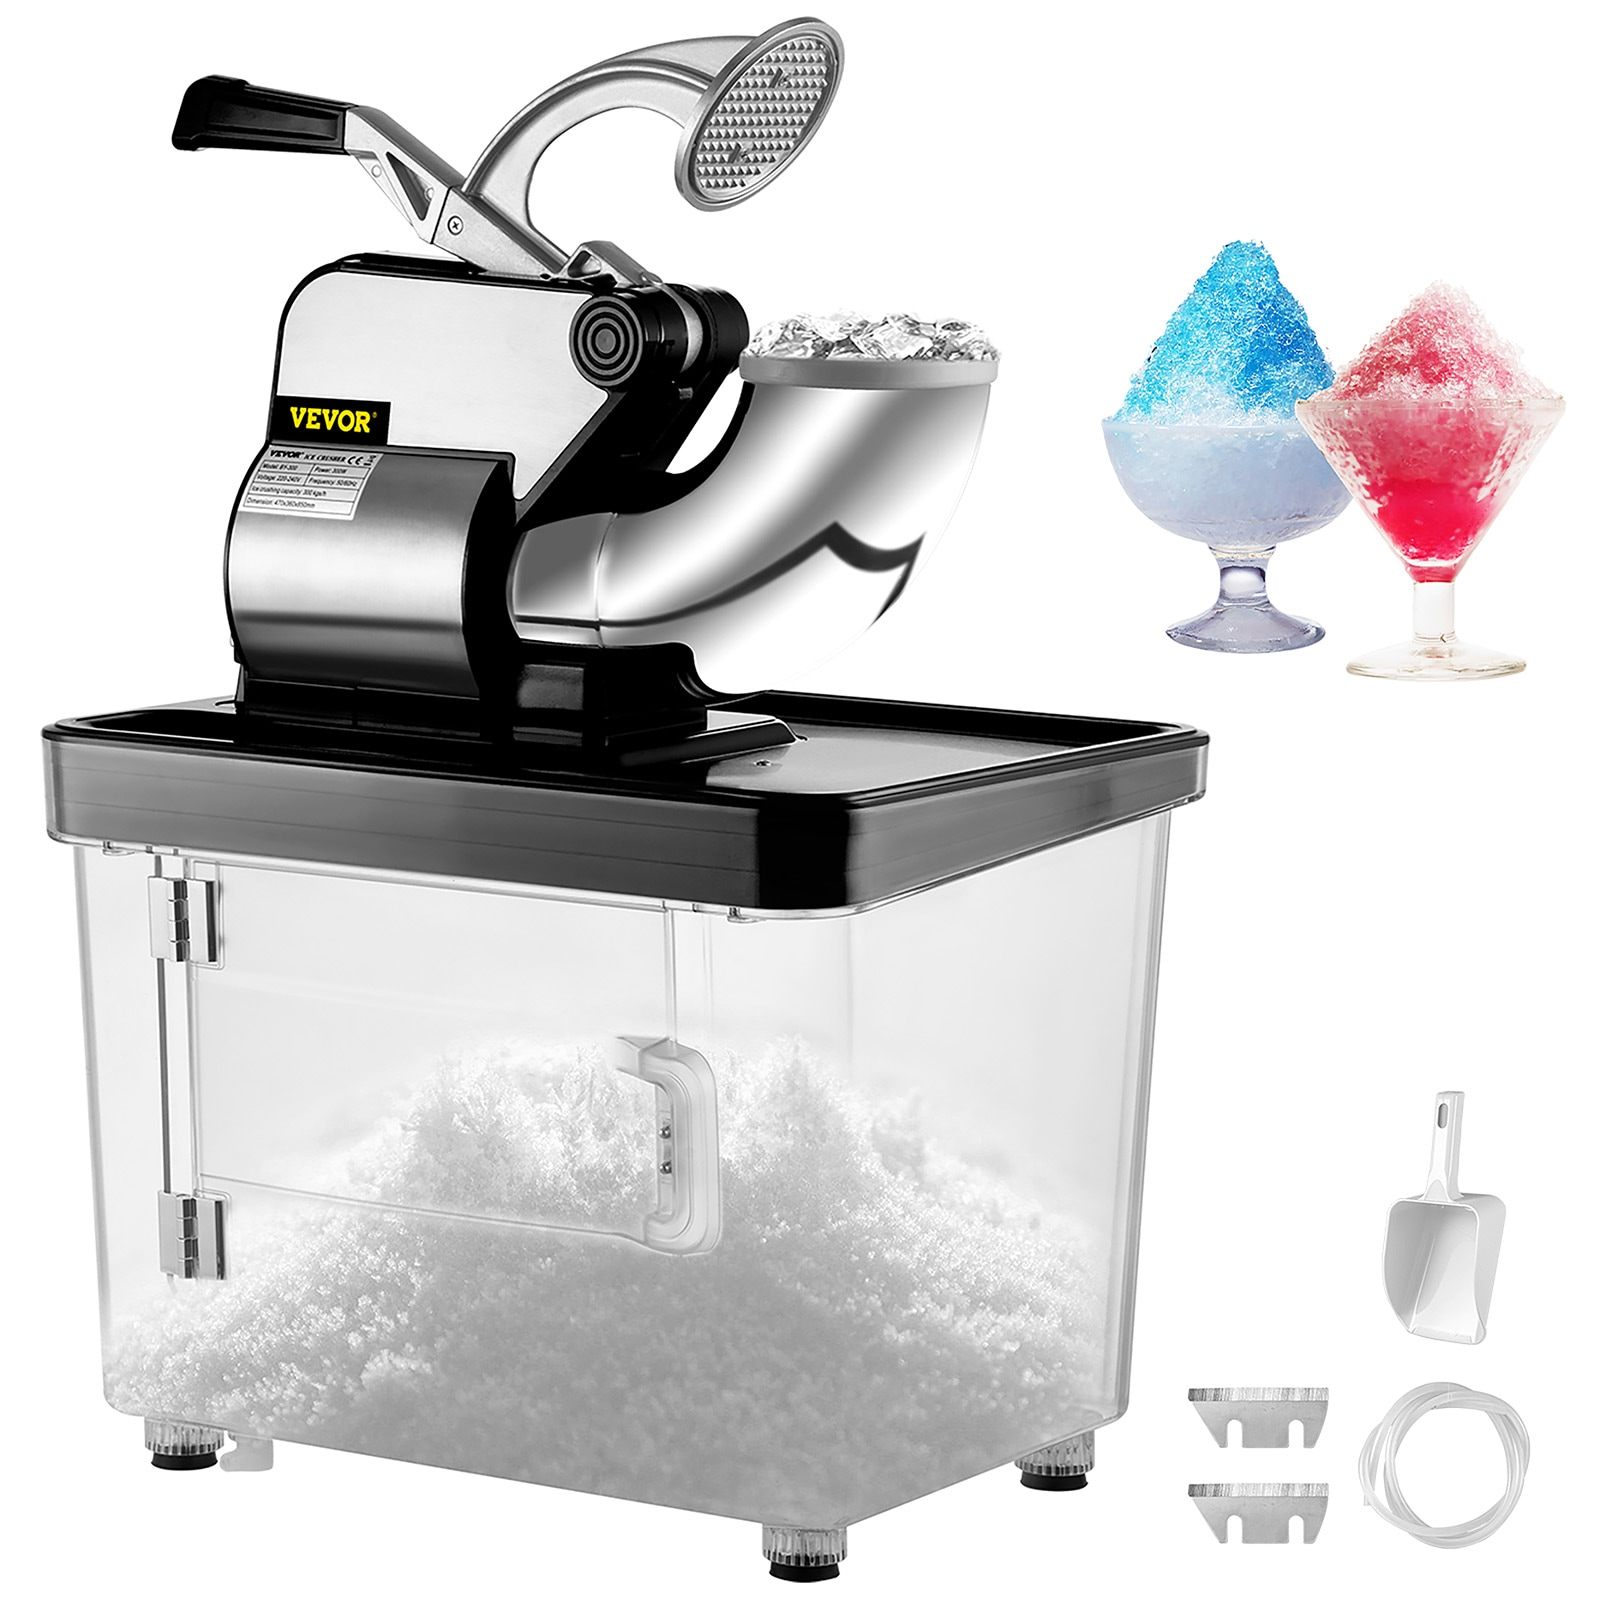 VEVORbrand Electric Ice Shaver Crusher Snow Cone Maker Machine